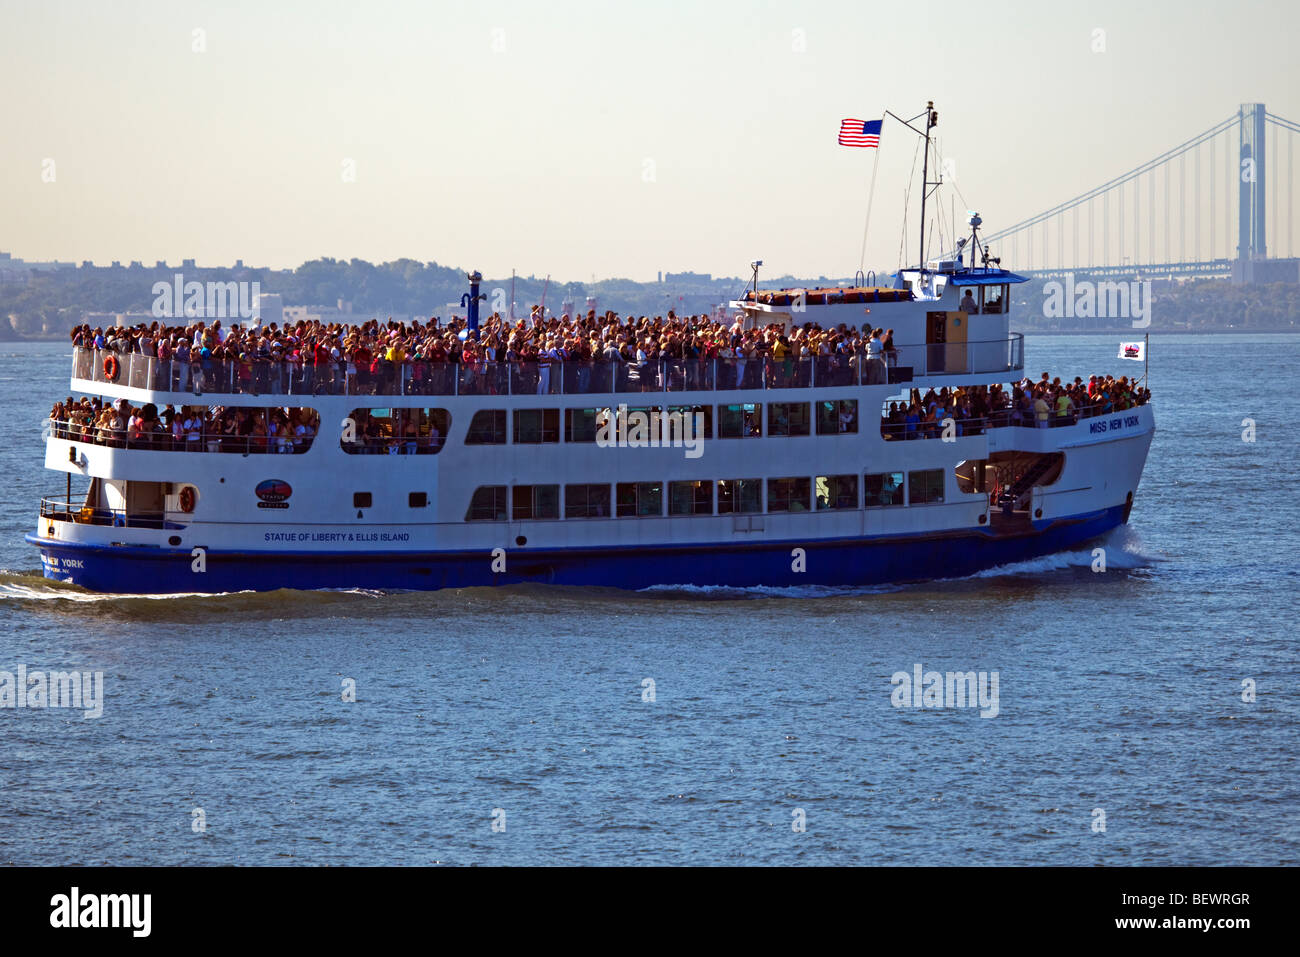 overcrowded-boat-in-new-york-BEWRGR.jpg